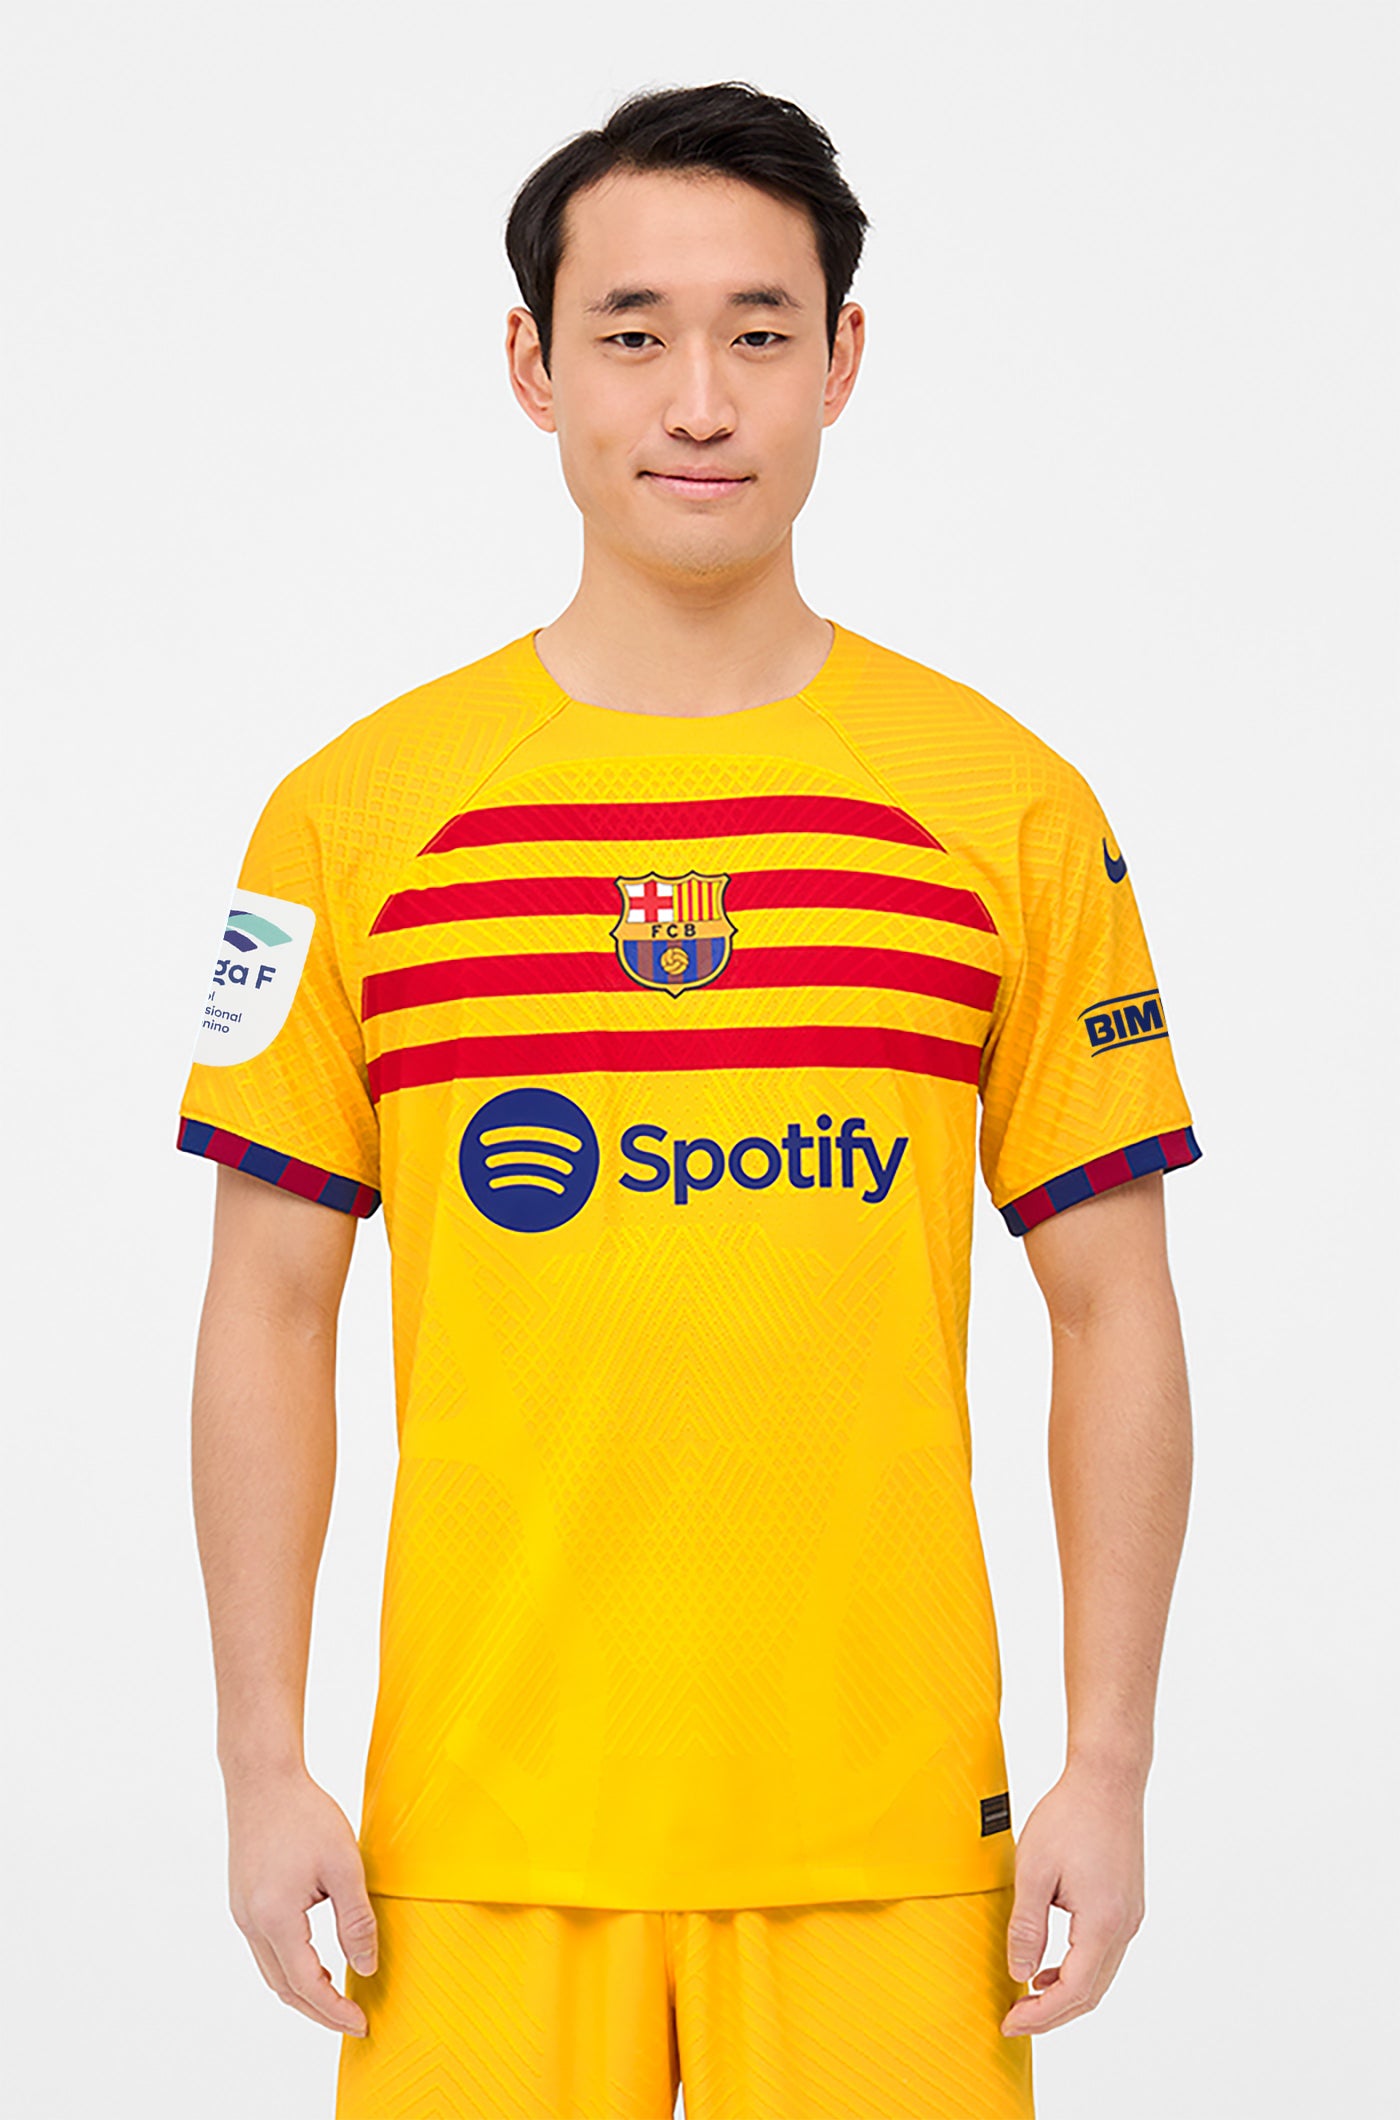 Liga F FC Barcelona fourth Shirt 23/24 Player’s Edition